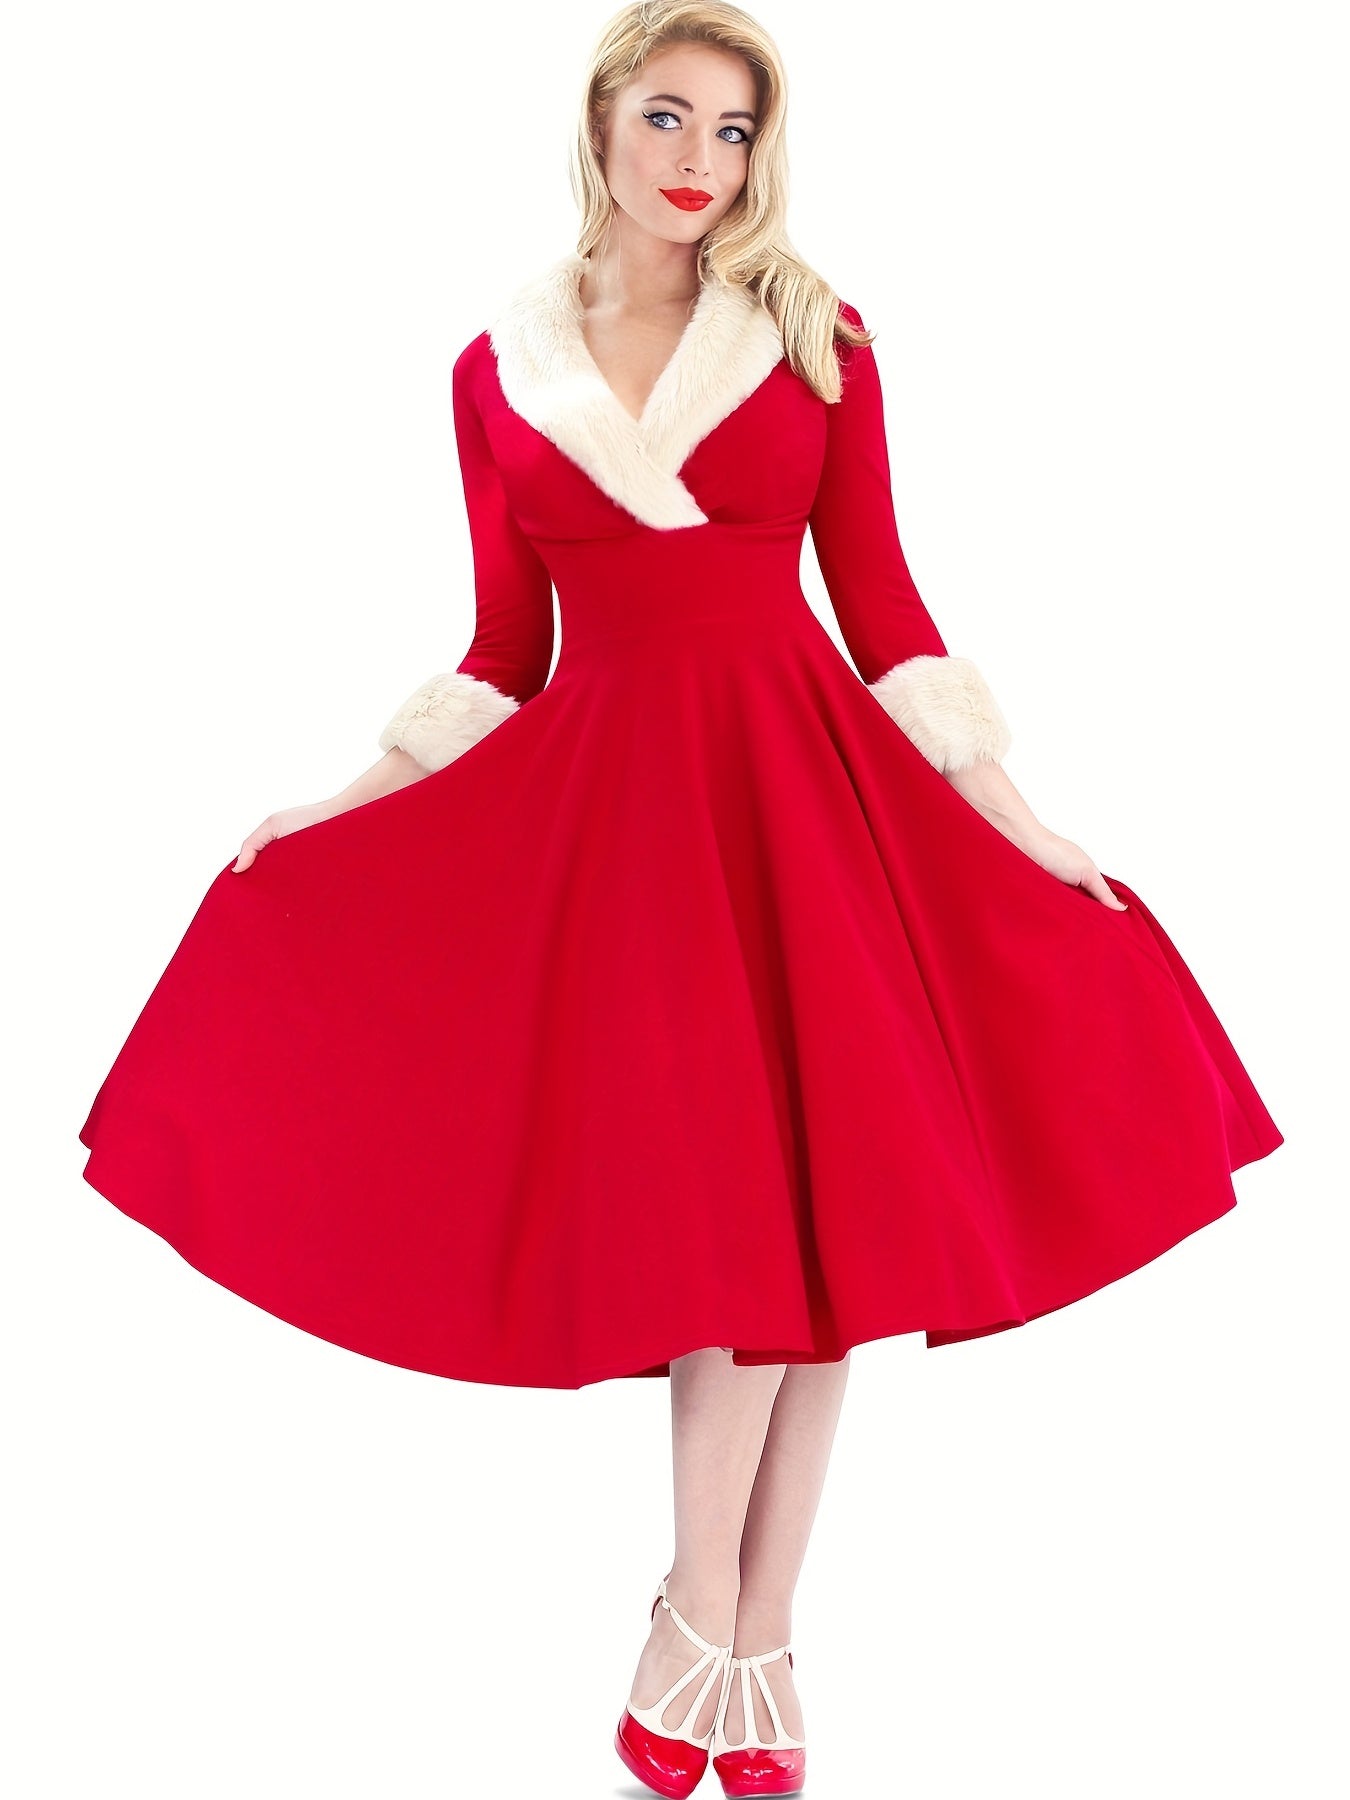 Fuzzy Solid Dress, Vintage V Neck Christmas Party Midi Dress, Women's Clothing